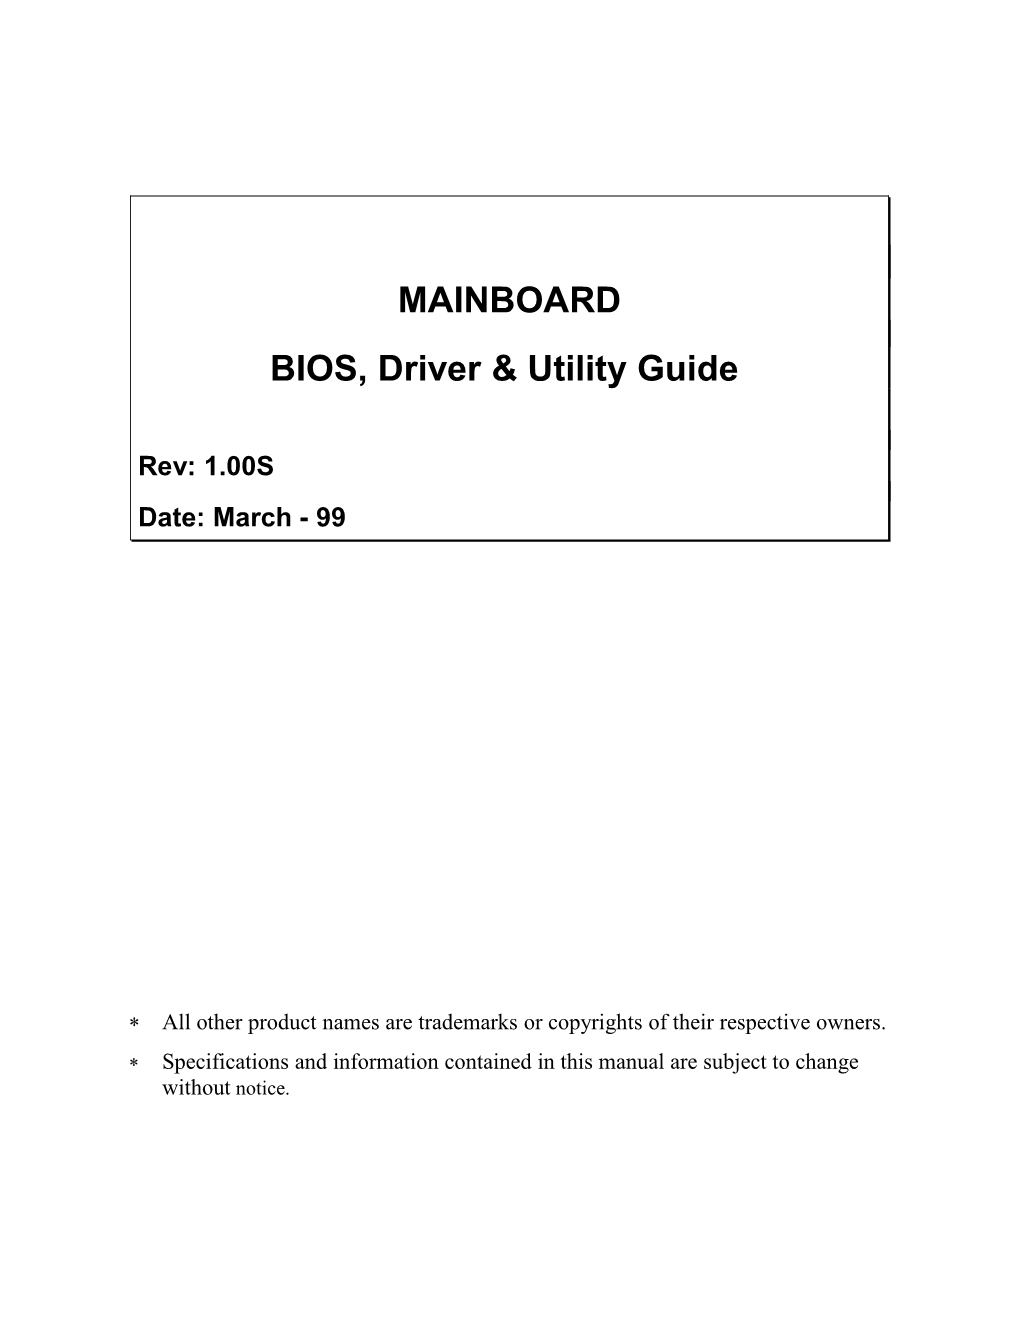 BIOS, Driver & Utility Guide